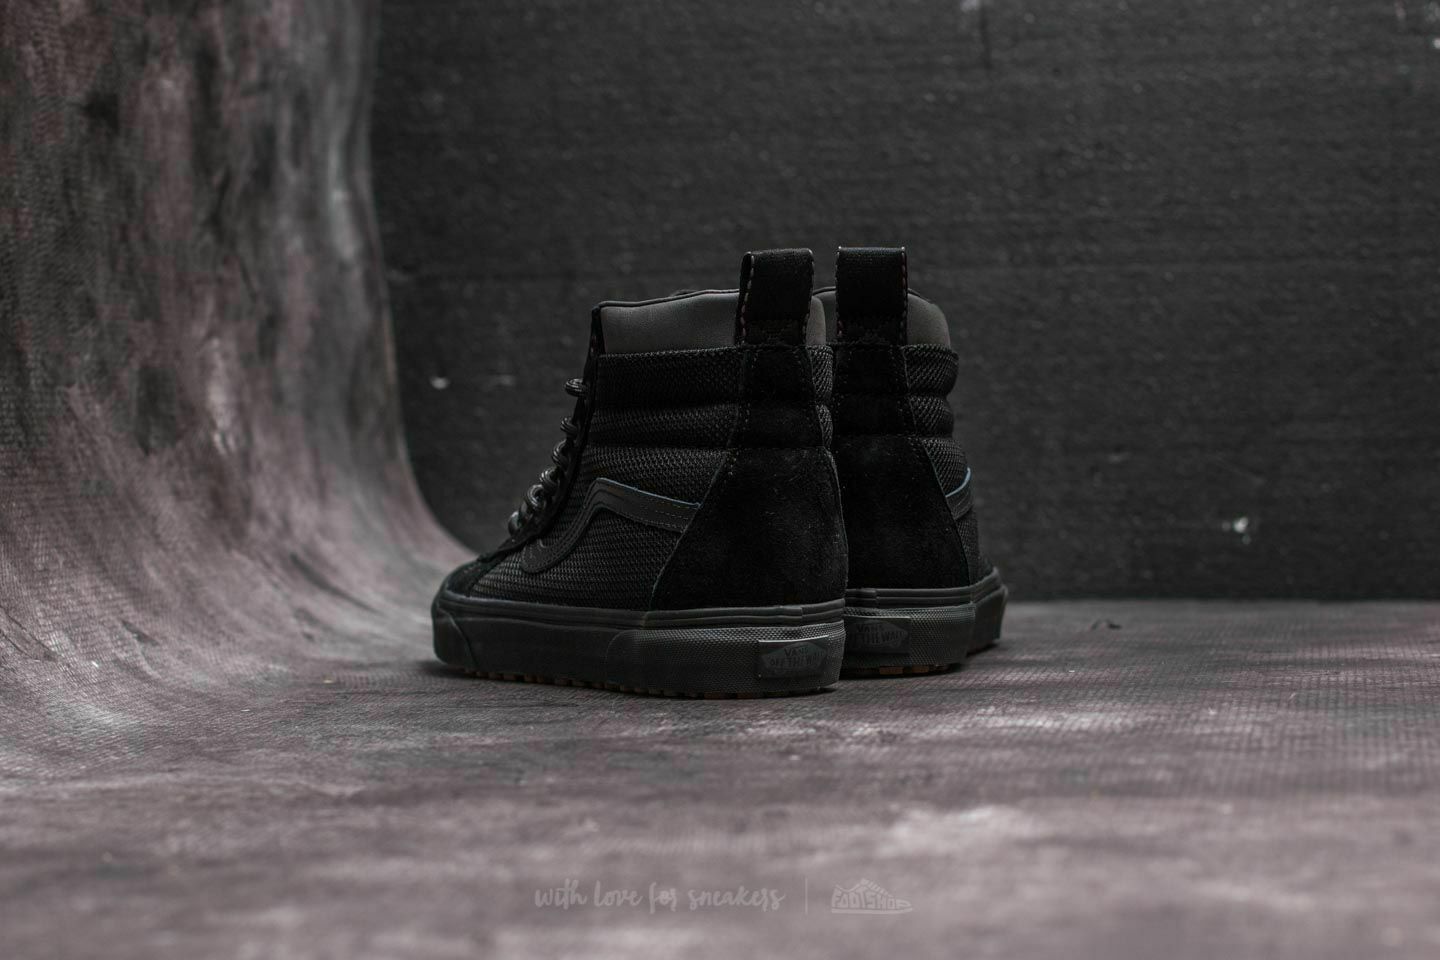 Vans SK8 Hi MTE Black/Ballistic Men's Classic Skate Shoes Size 7 - image 4 of 5